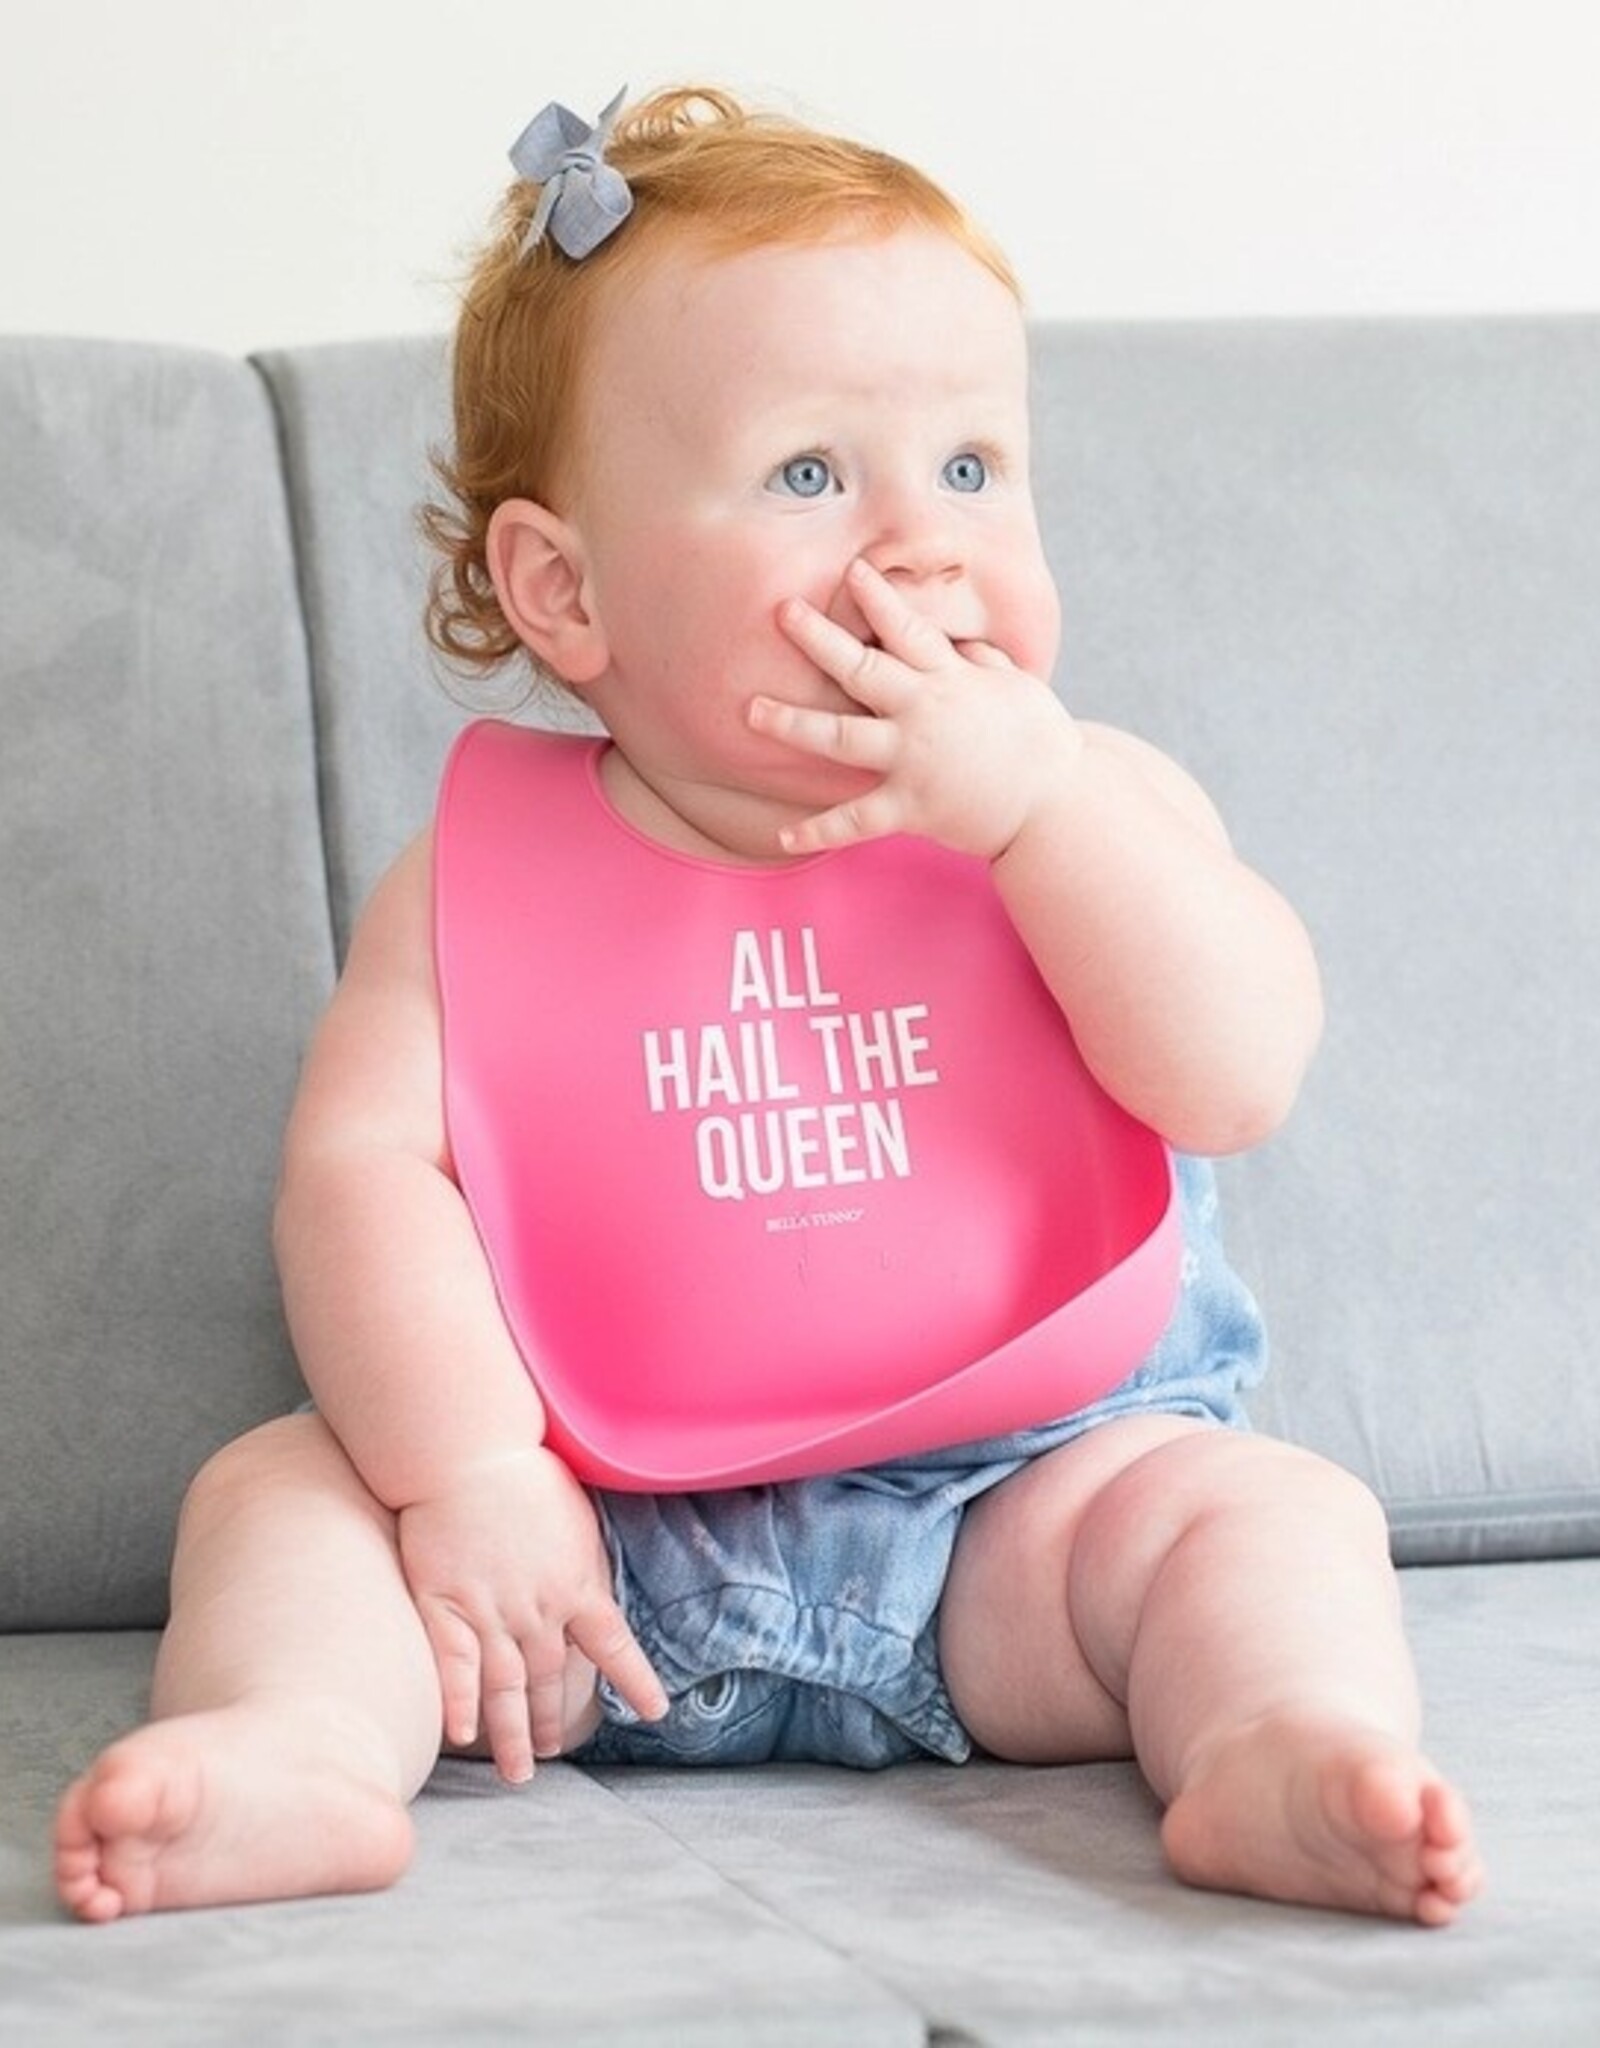 Bella Tunno Adjustable Baby Bib with Snack Pouch